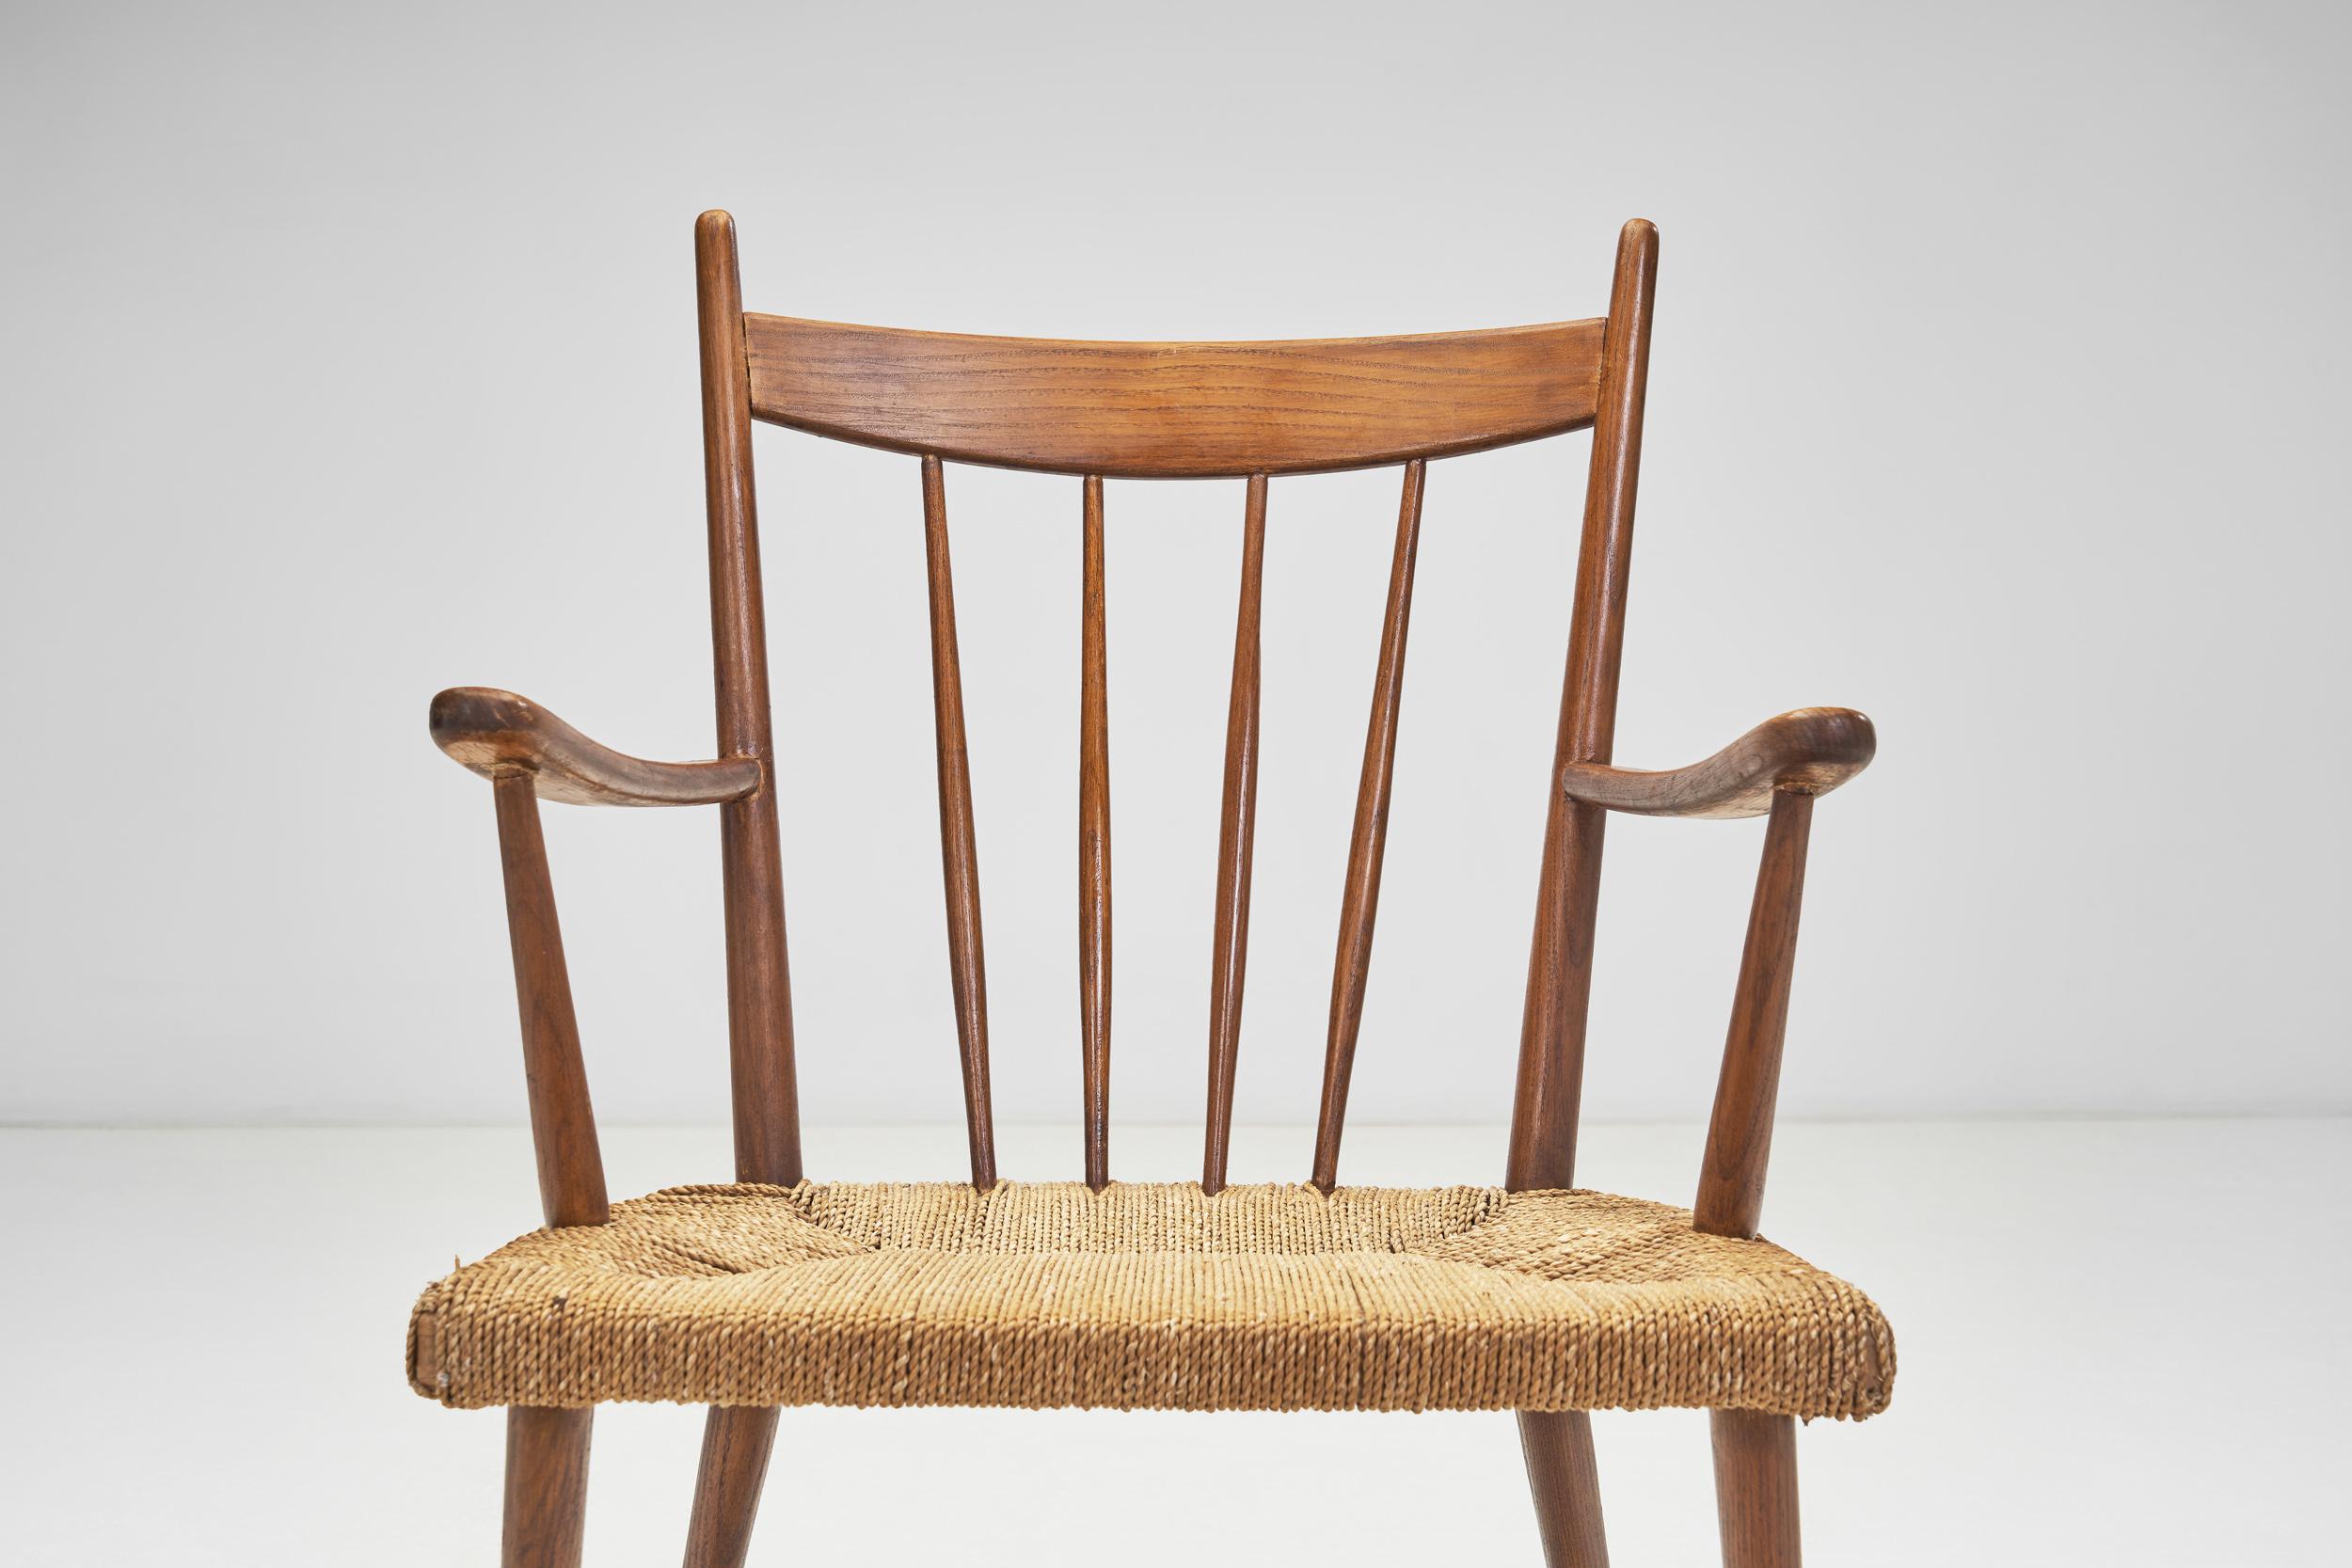 Teak Slatback Chair with Woven Danish Cord Seat, Denmark ca 1960s For Sale 6